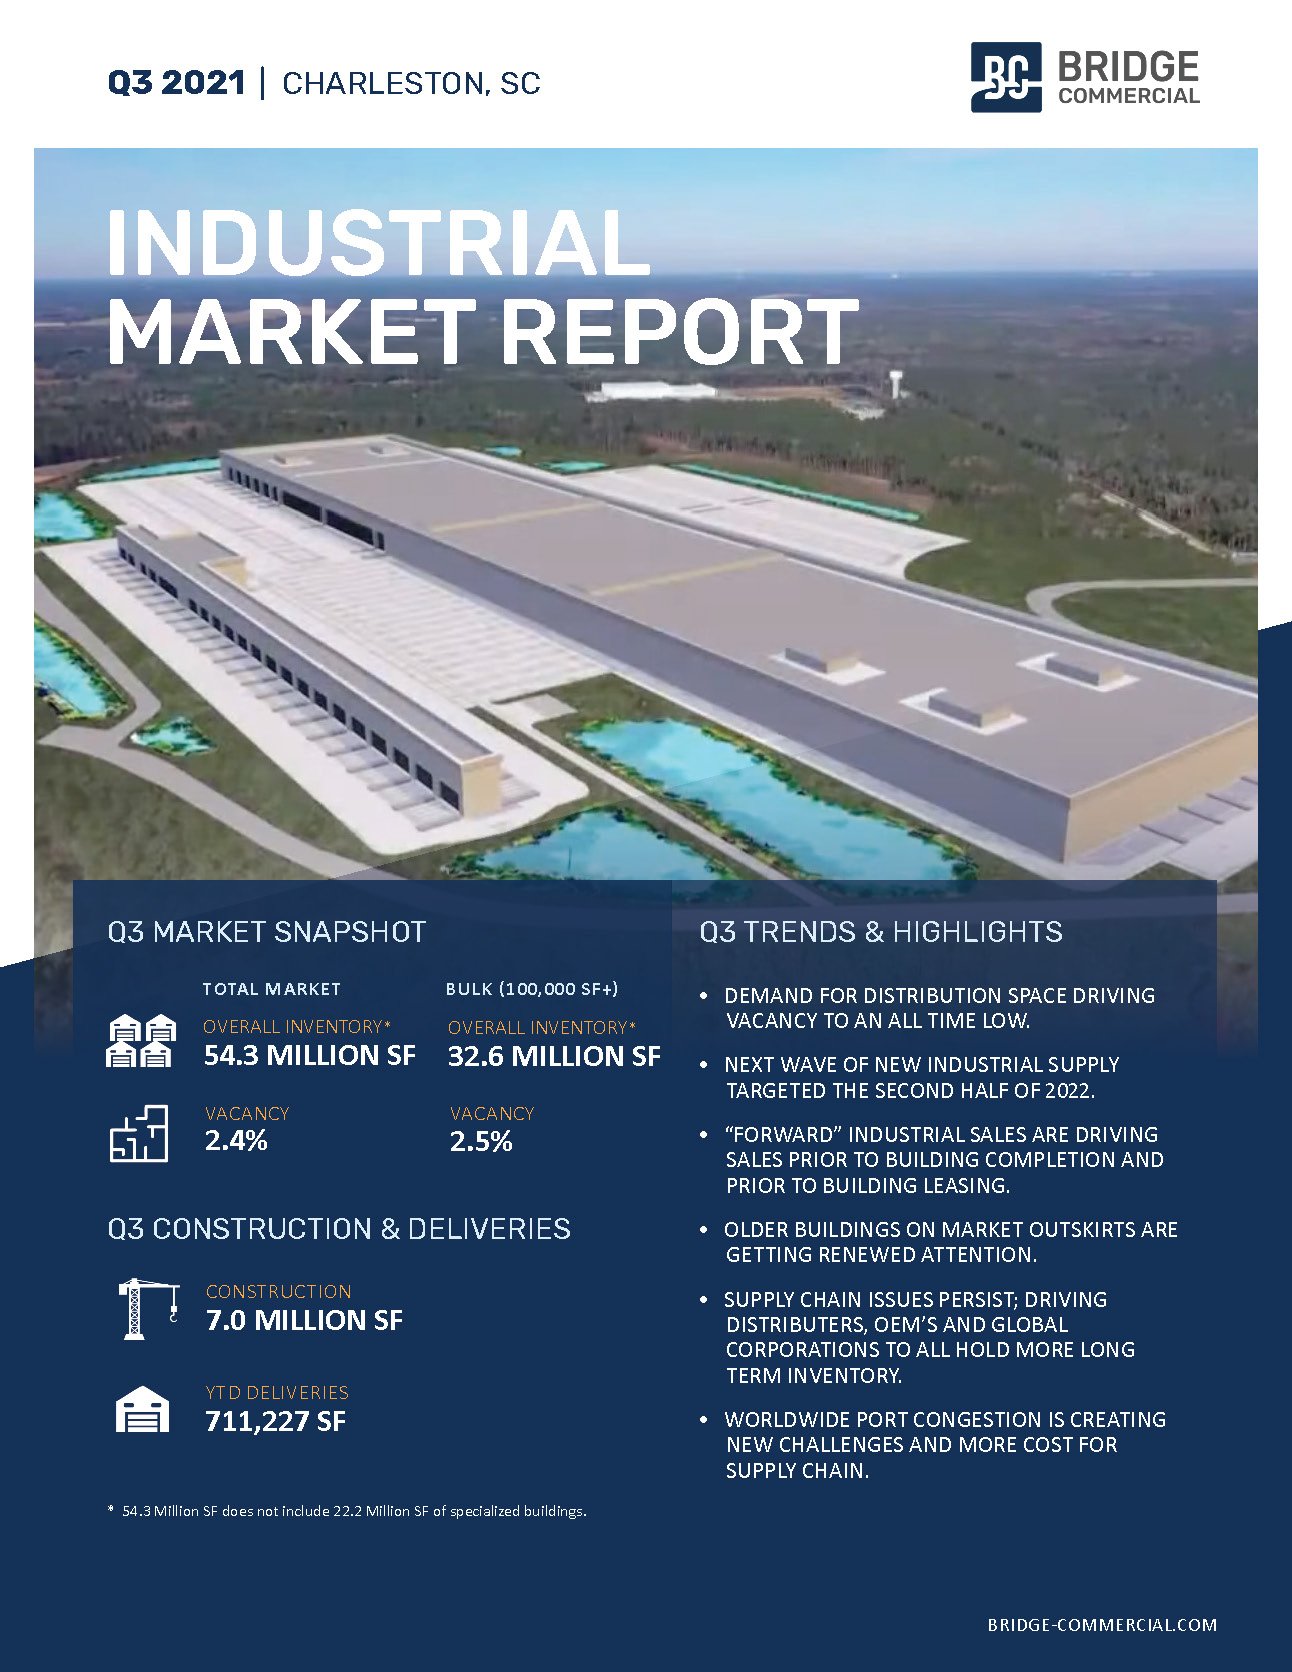 Q3 2021 Charleston Industrial Market Report_Bridge Commercial_Page_1.jpg